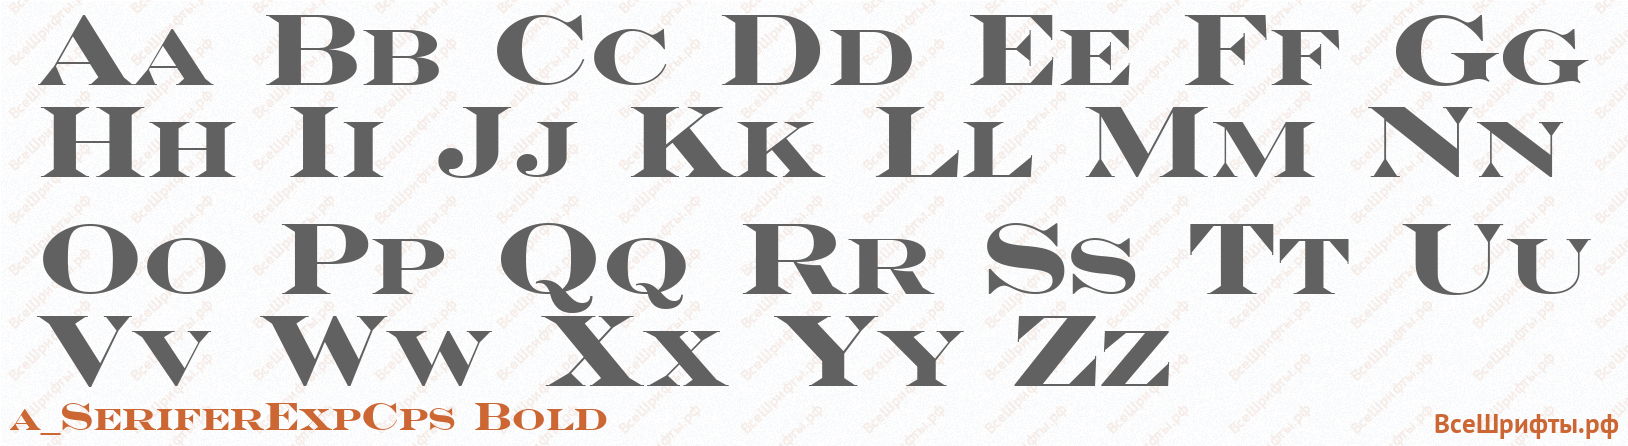 Шрифт a_SeriferExpCps Bold с латинскими буквами